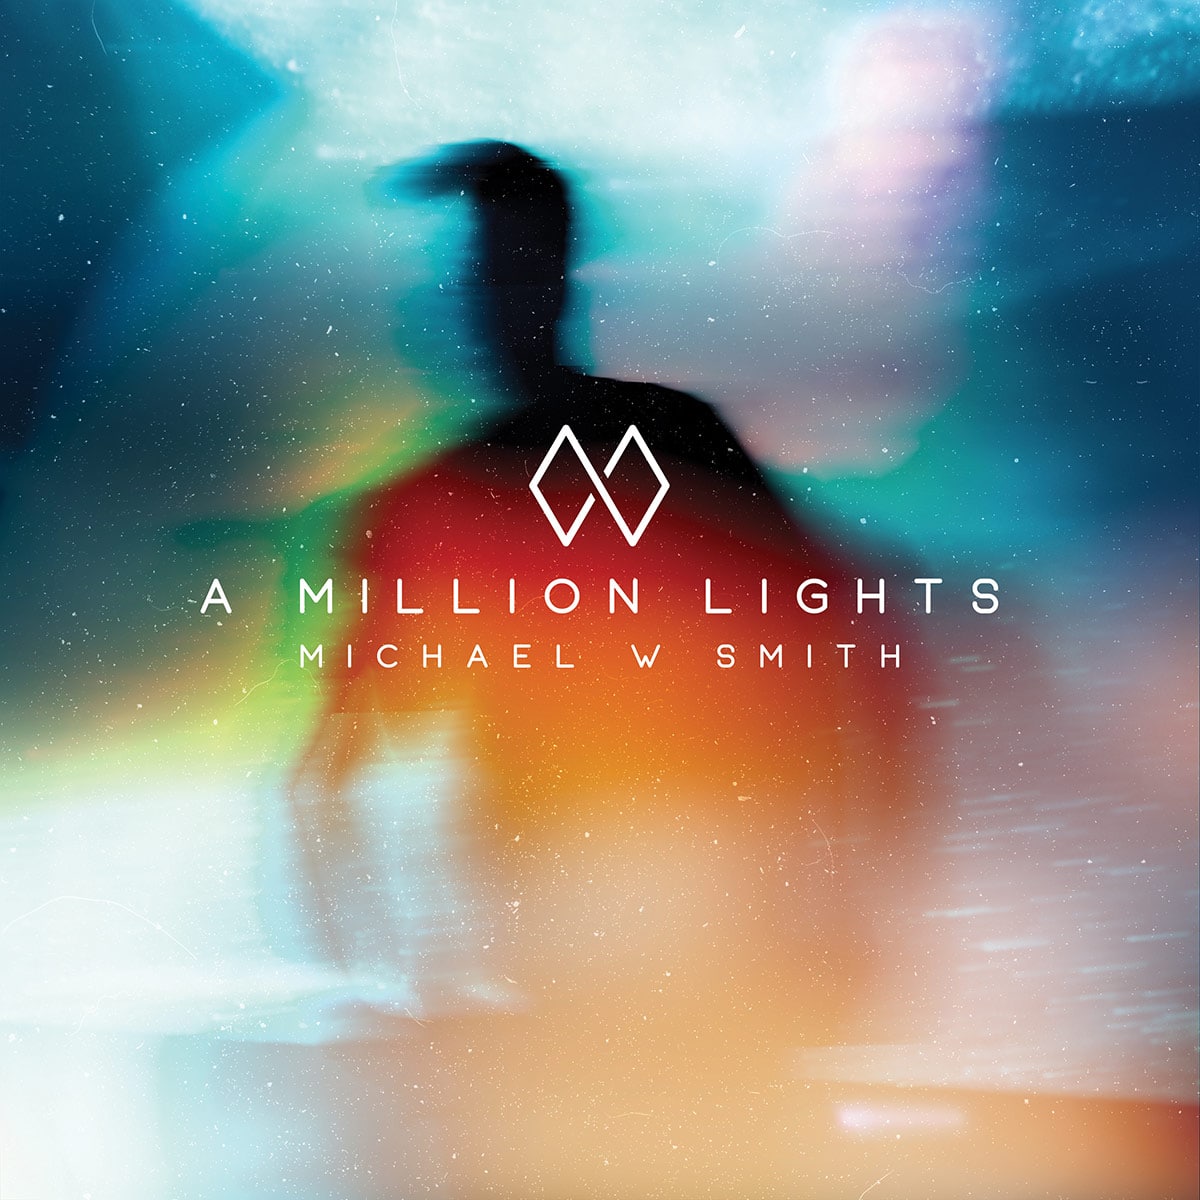 A milliton lights album art